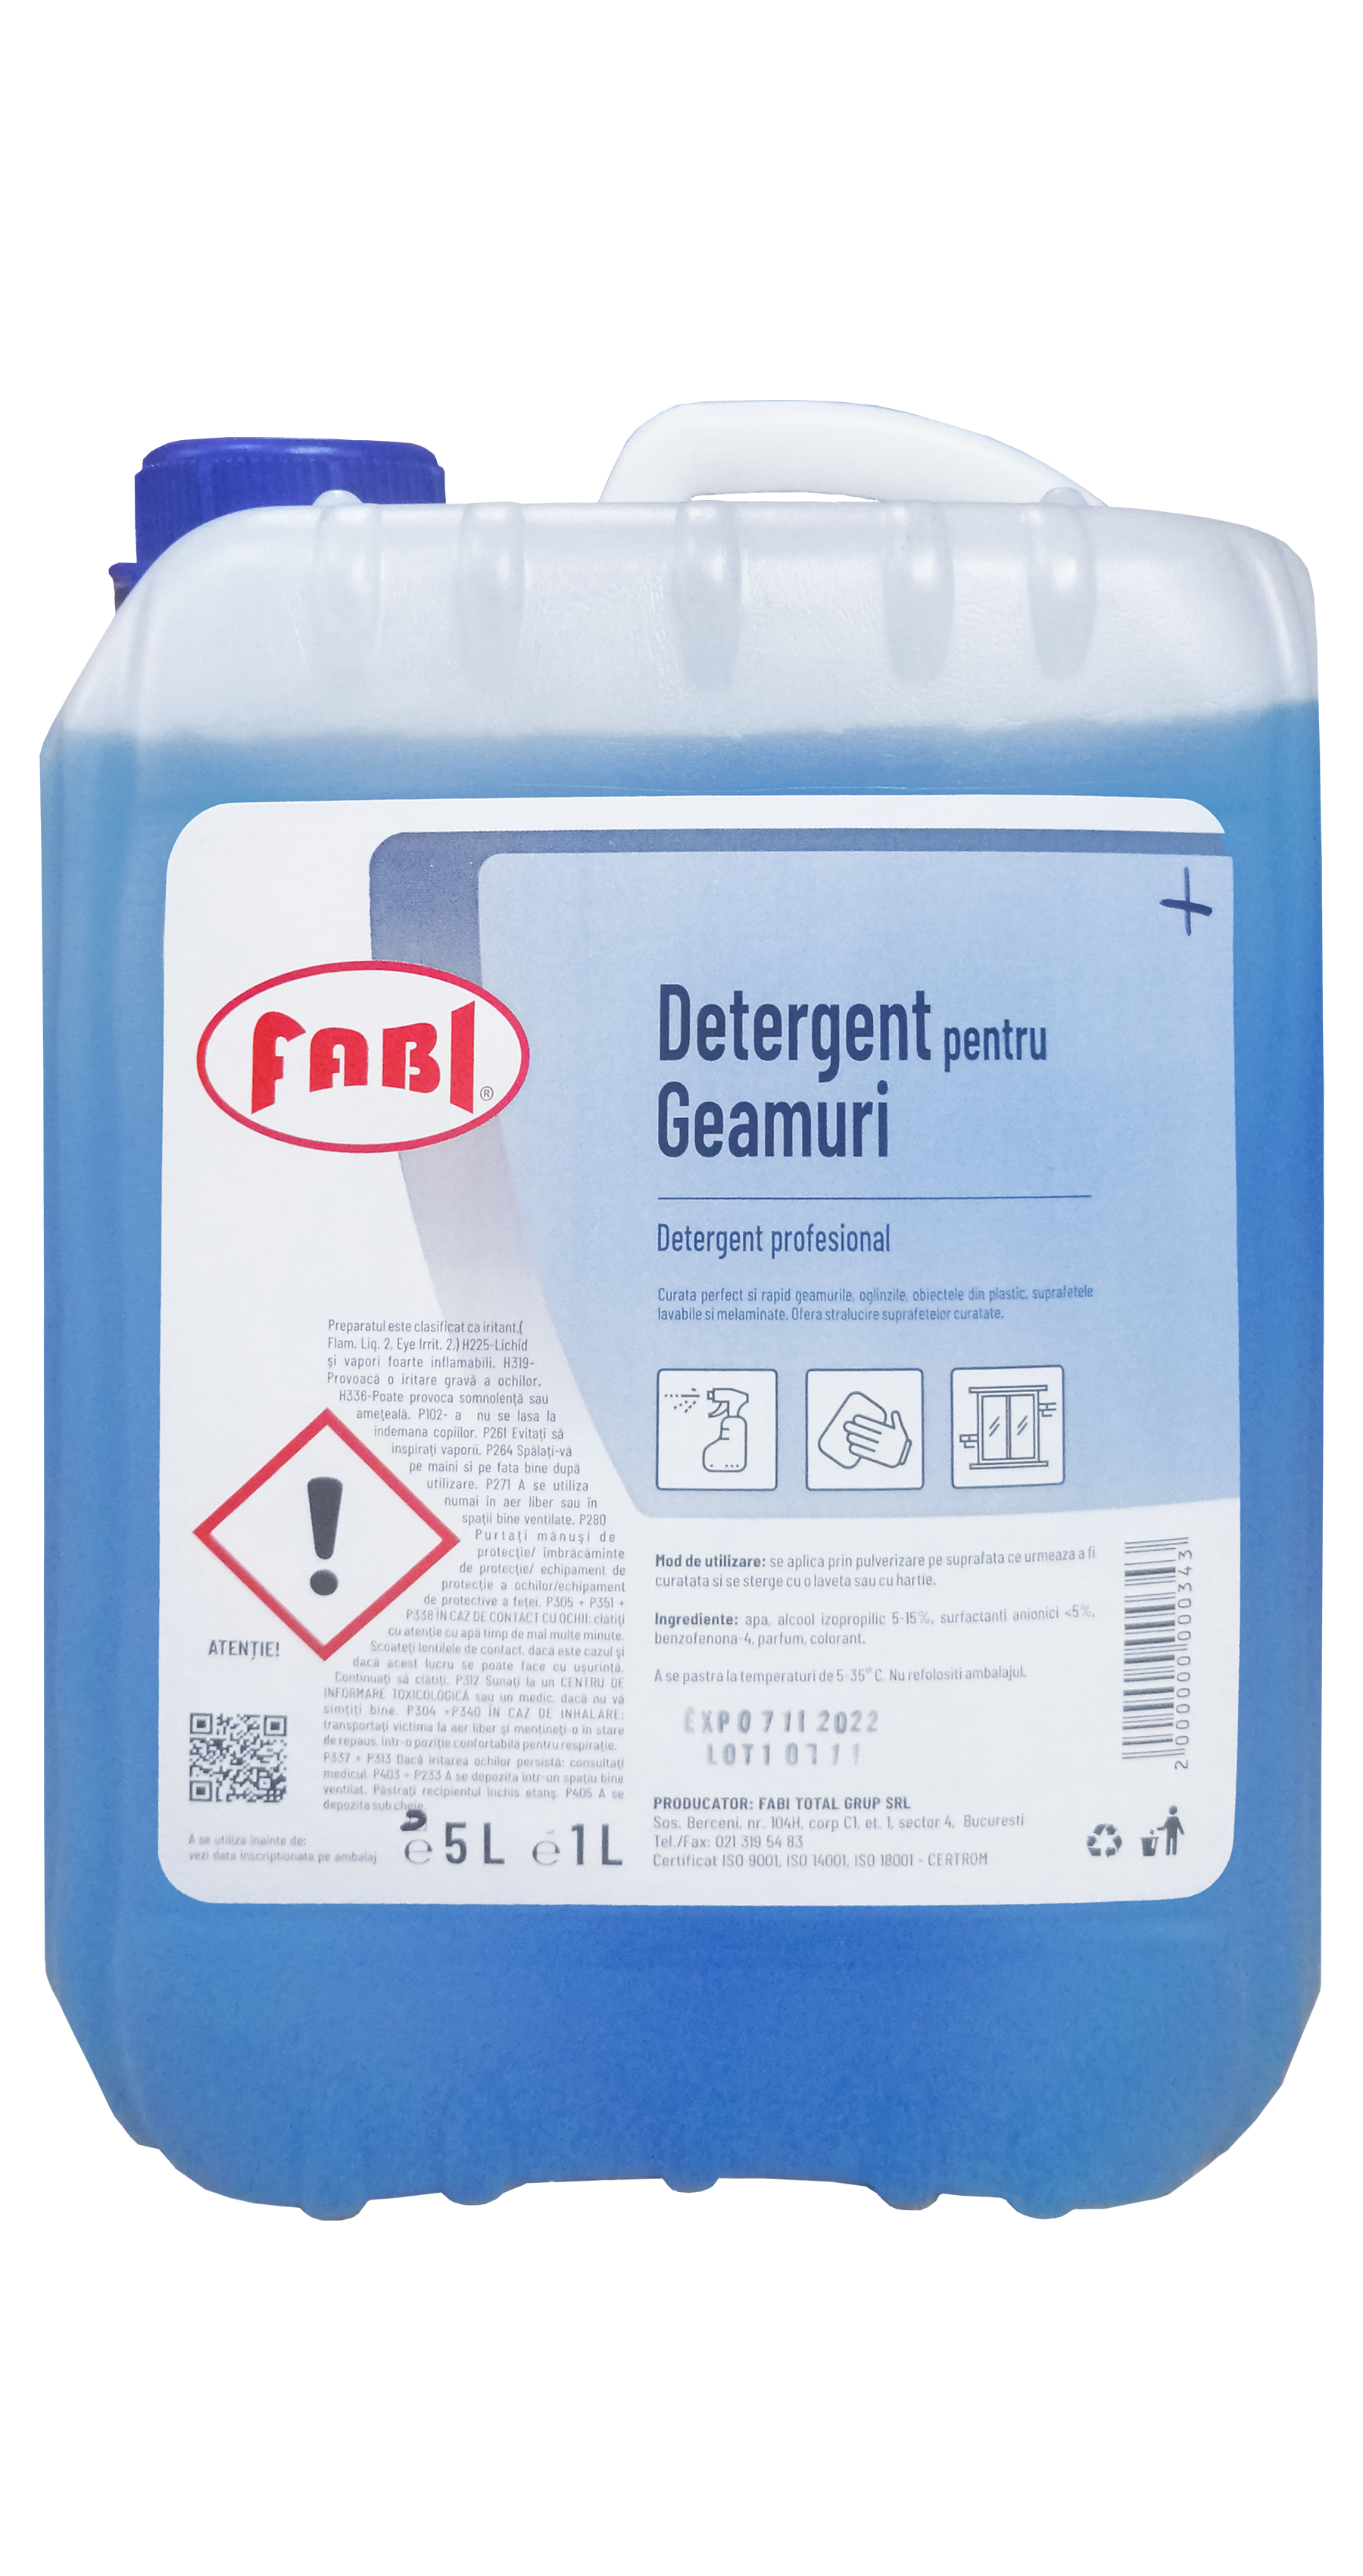 Detergent profesional pentru geamuri Fabi canistra 5L Fabi